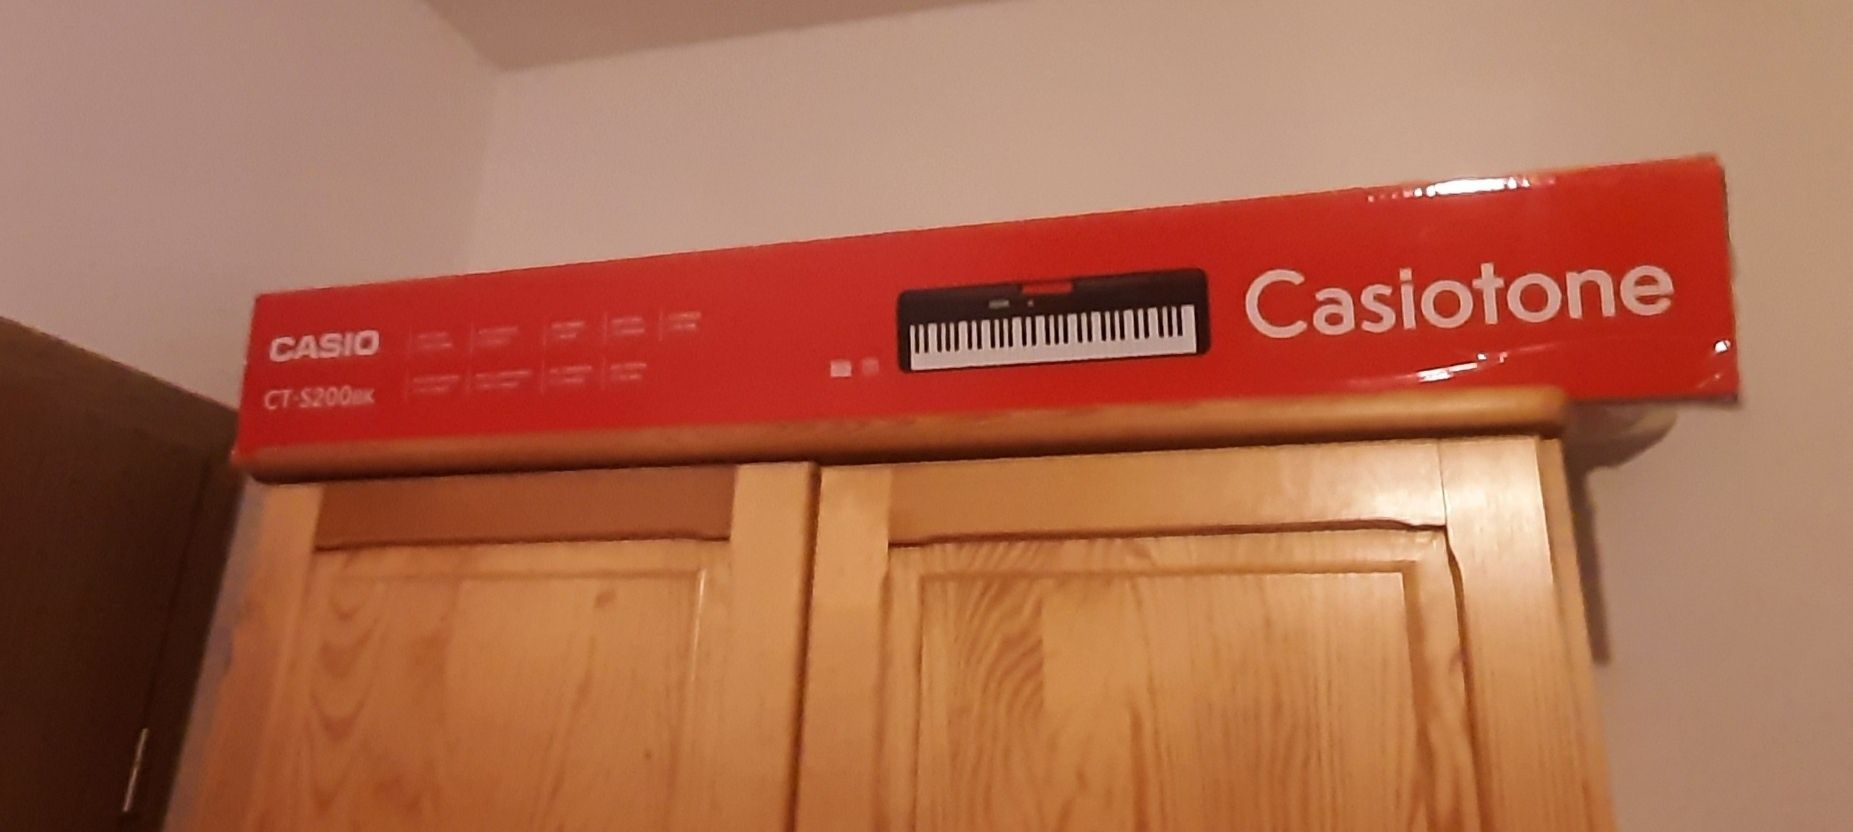 Keyboard Casiotone CT S200bk